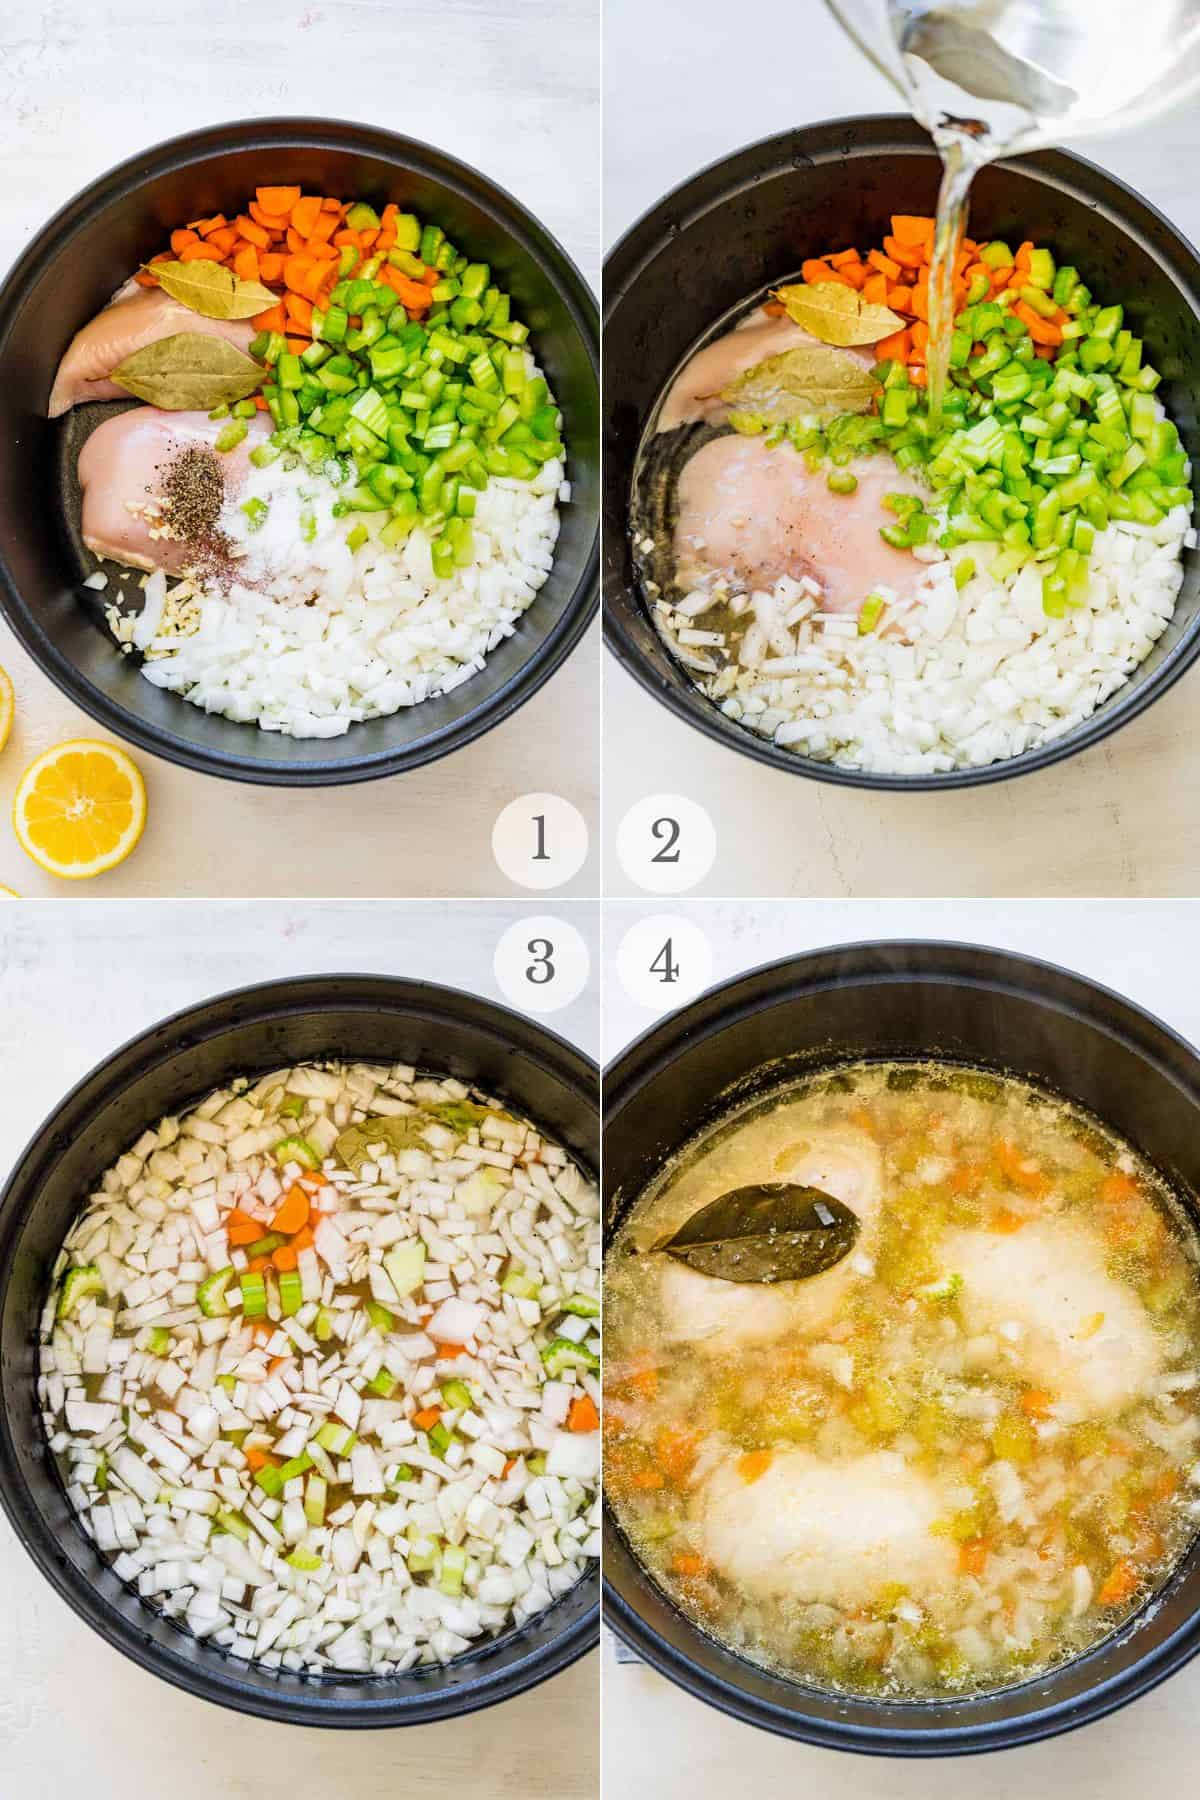 lemon chicken rice soup recipe steps 1-4.